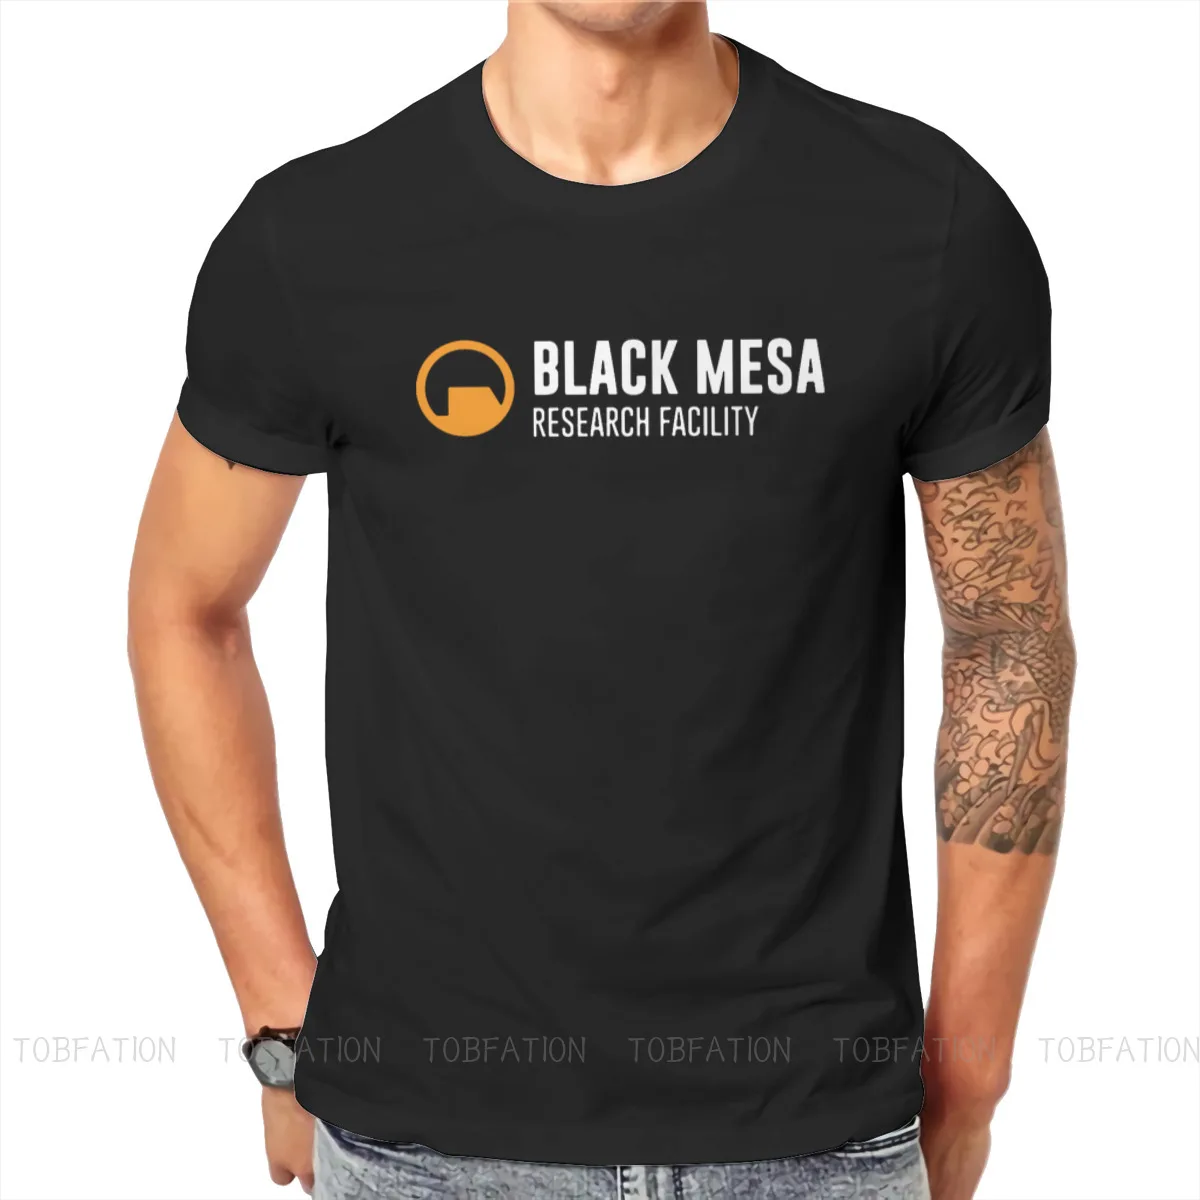 

Portal Game Chell Atlas P-Body Fabric TShirt Black Mesa Research Facility Classic T Shirt Homme Men Clothes Printing Big Sale